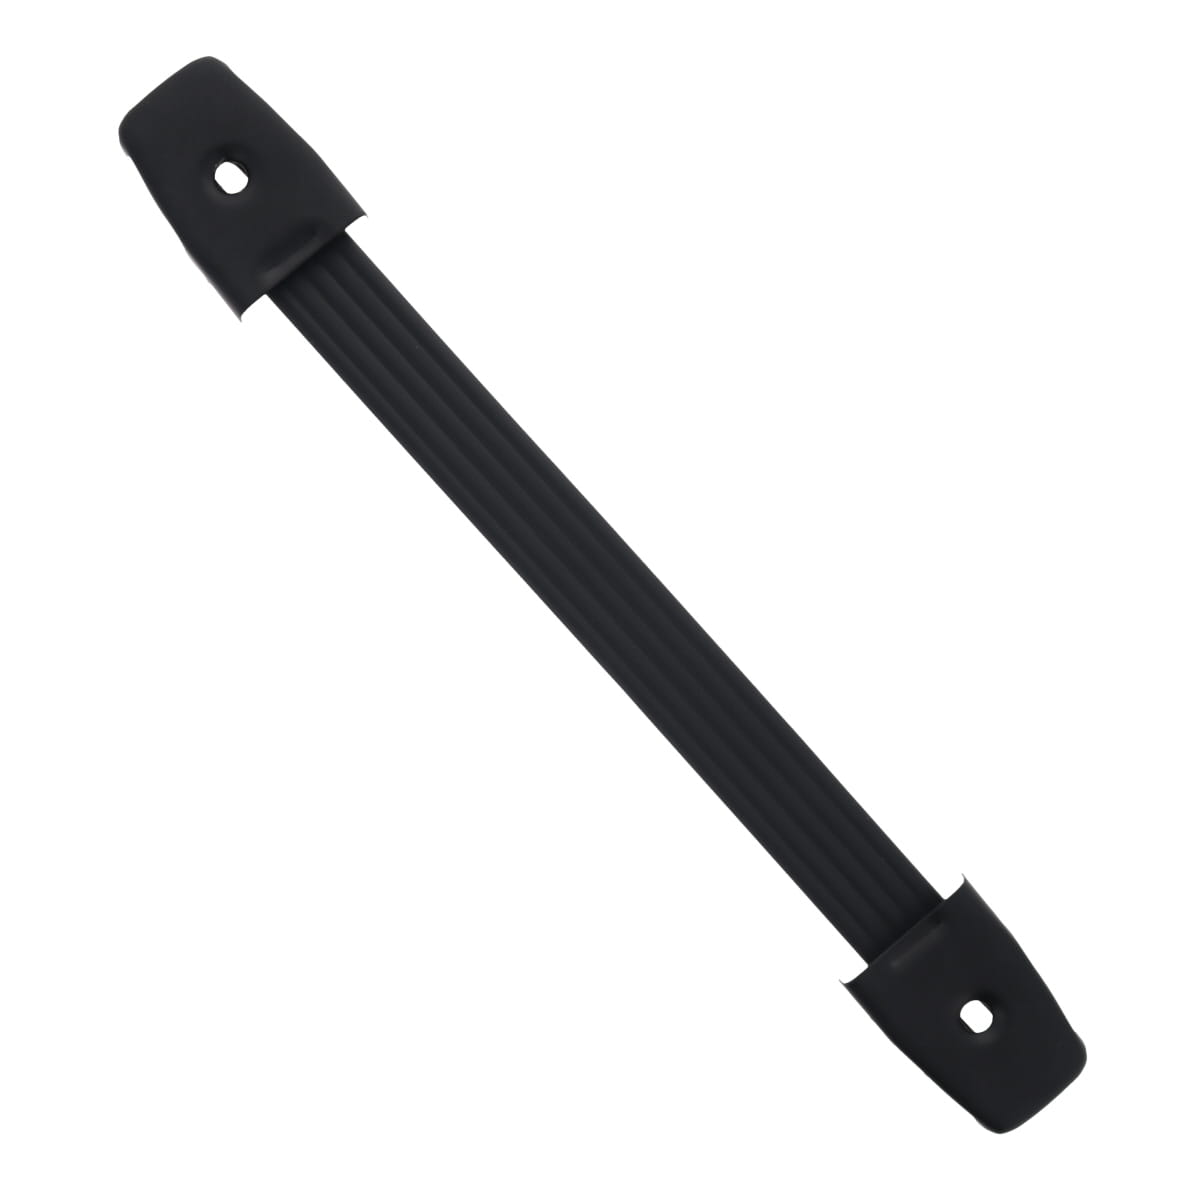 Large Strap Handle Black with Black End Caps - TCH Hardware